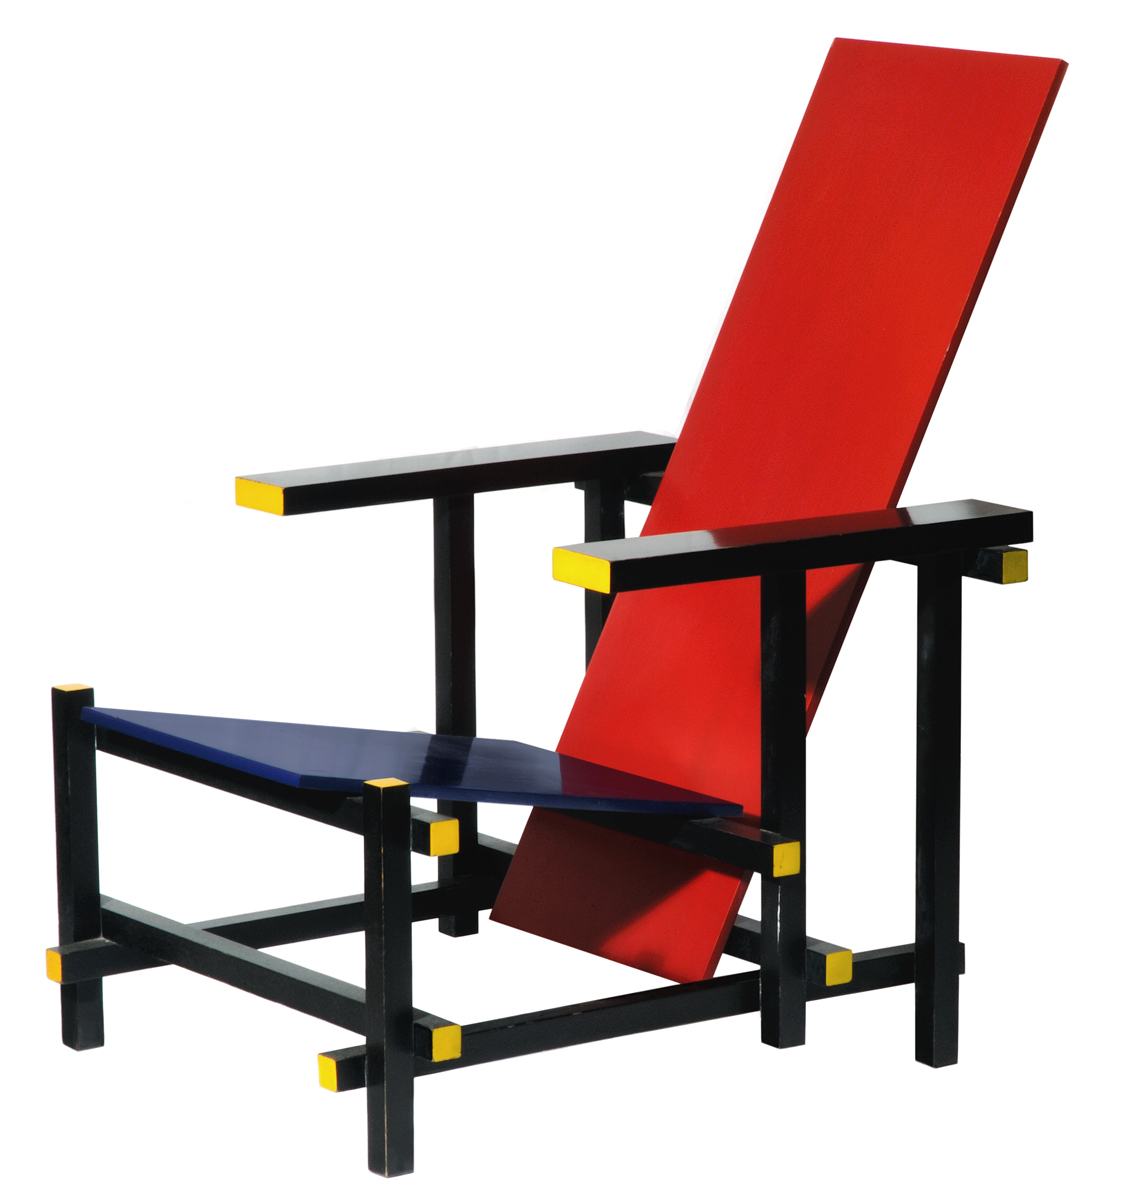 La sedia rossa e blu (Rood-blauwe stoel) di Gerrit Rietveld (1917)